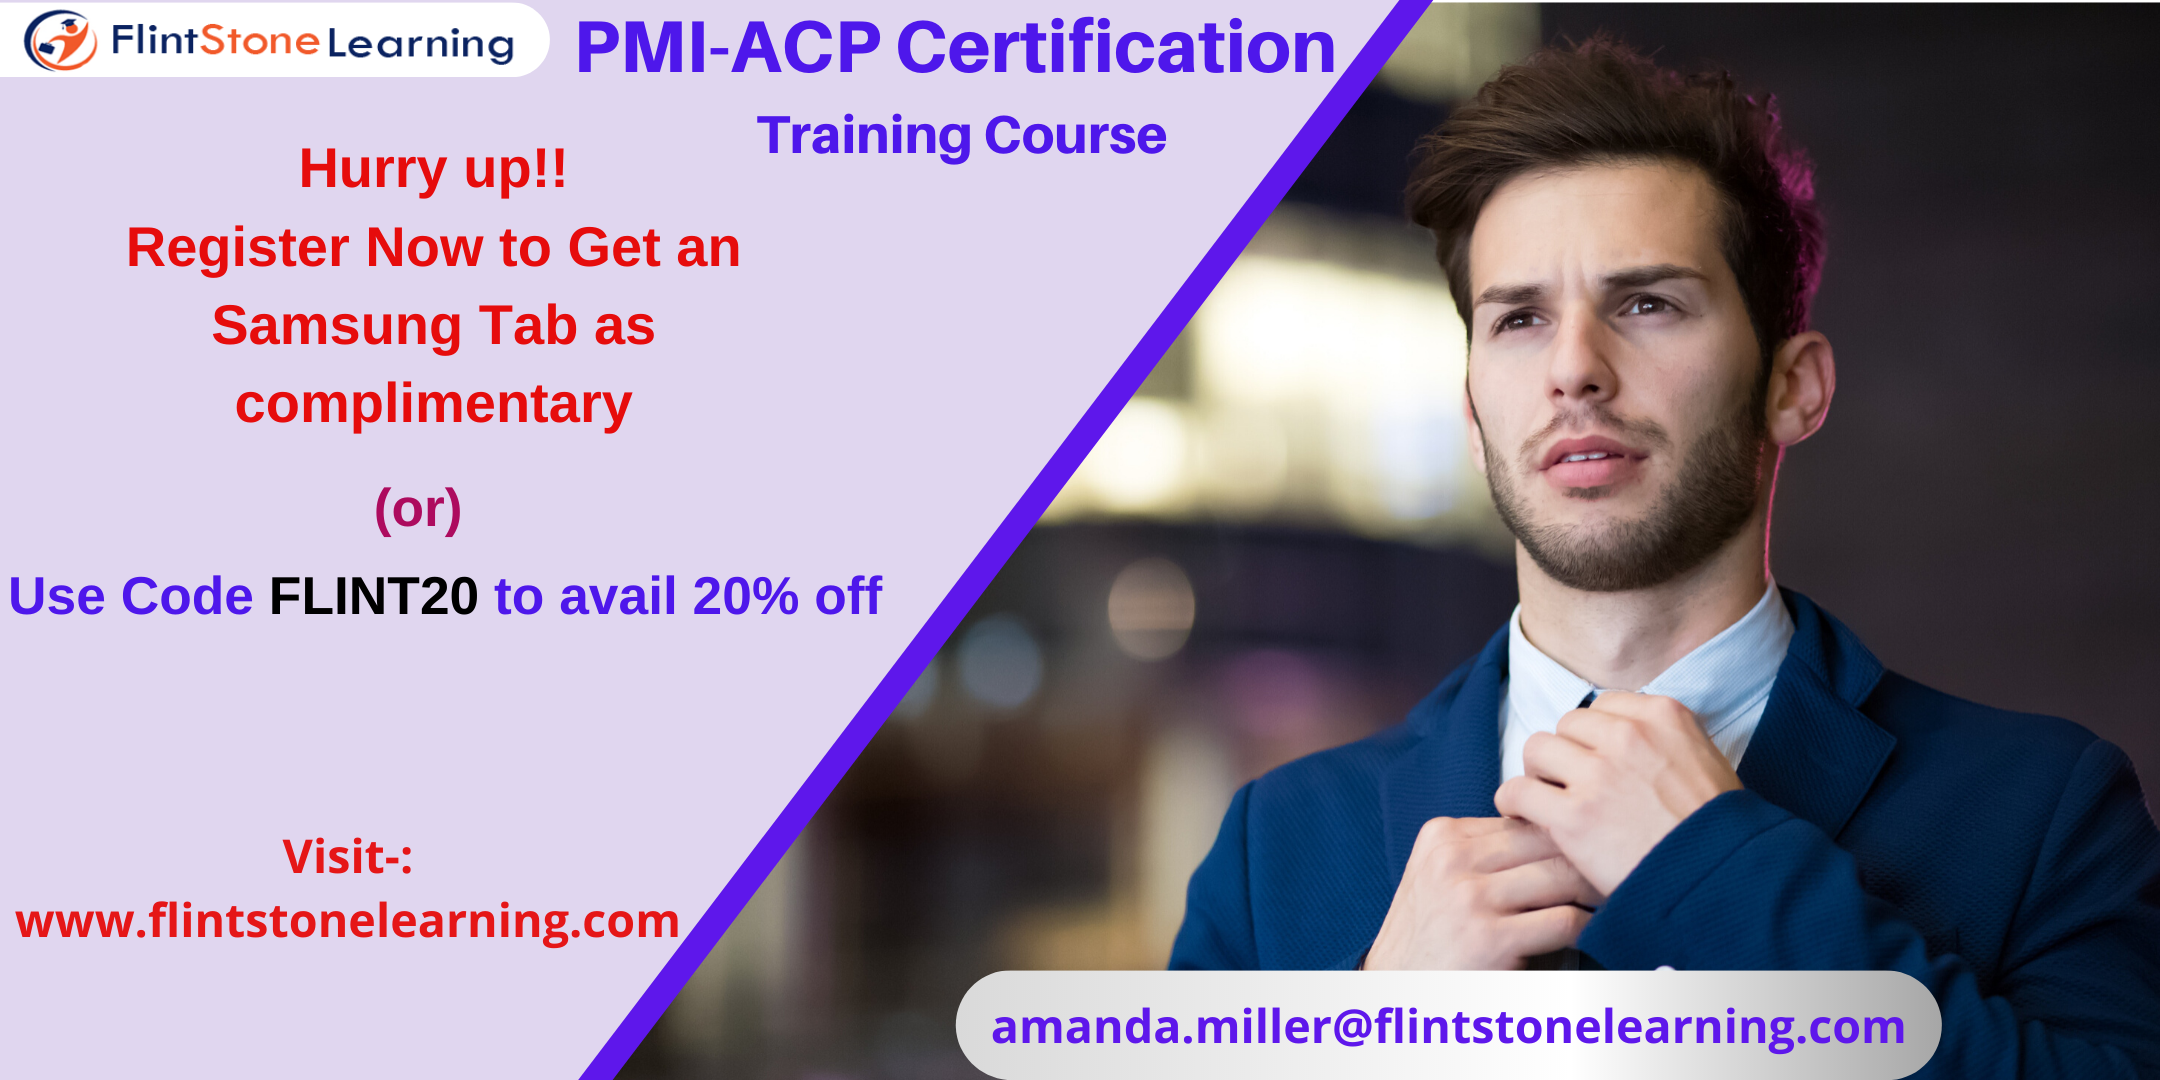 PMI-ACP Certification Training Course in Dominguez Hills, CA